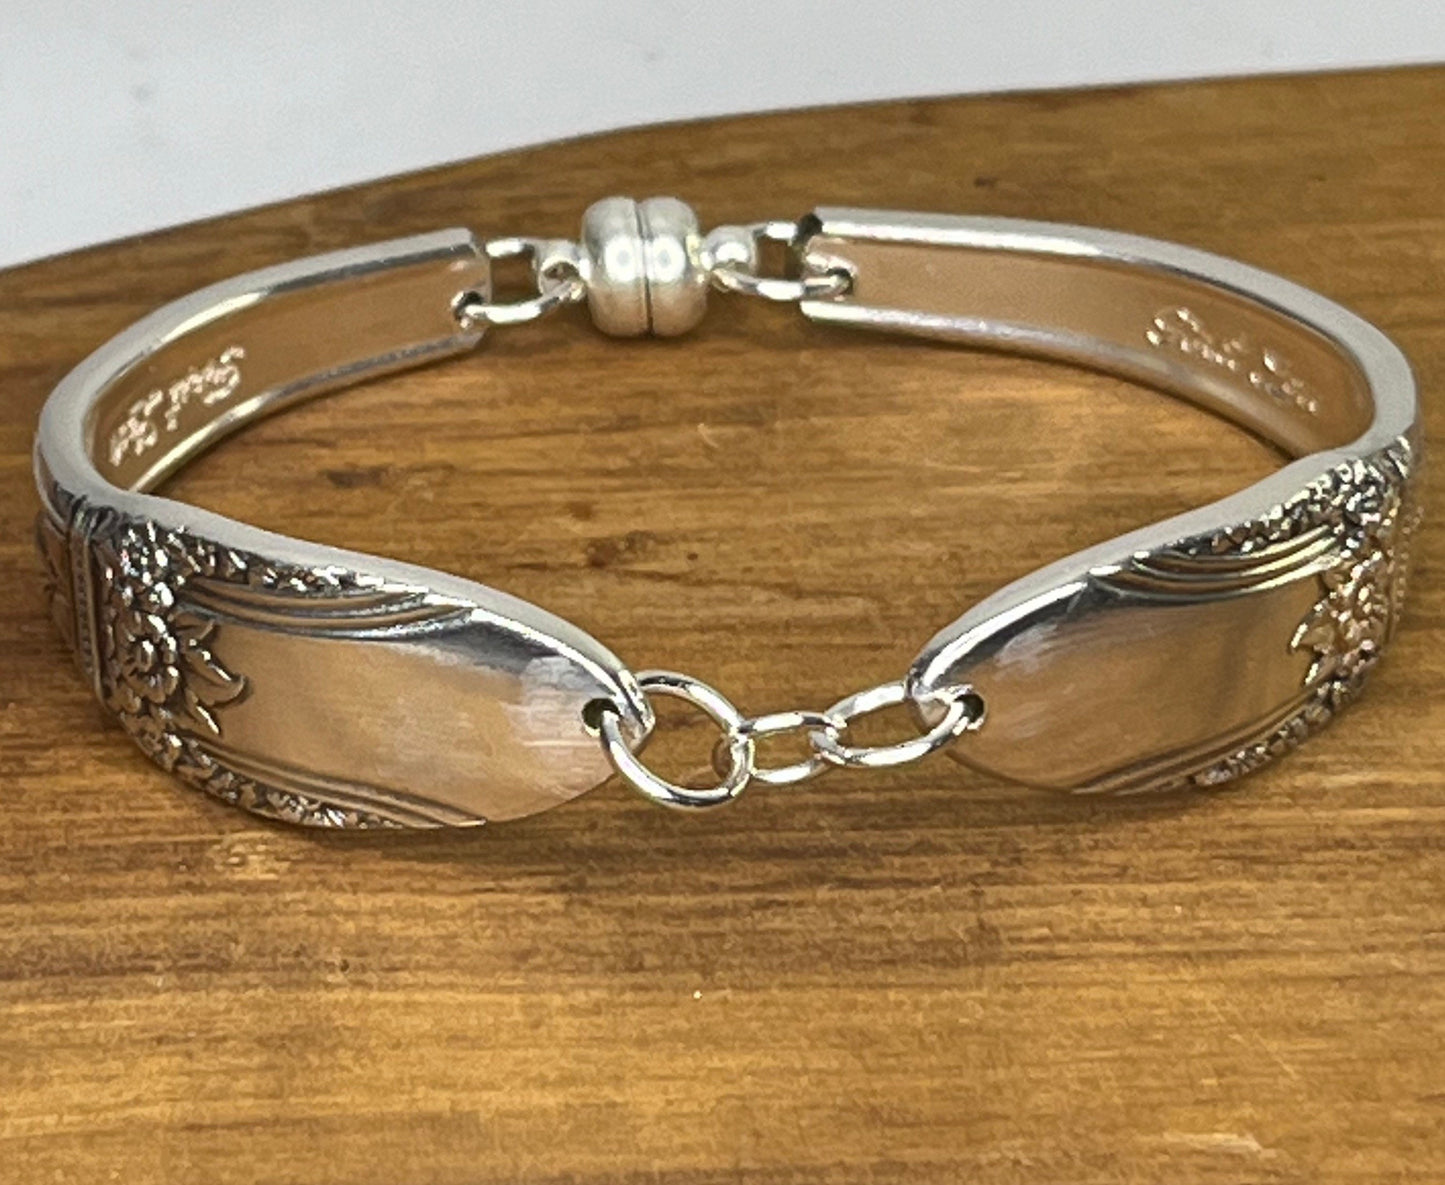 Silver Bracelet made from the Handle of Vintage Antique Spoons, Silverware bracelet, spoon bracelet